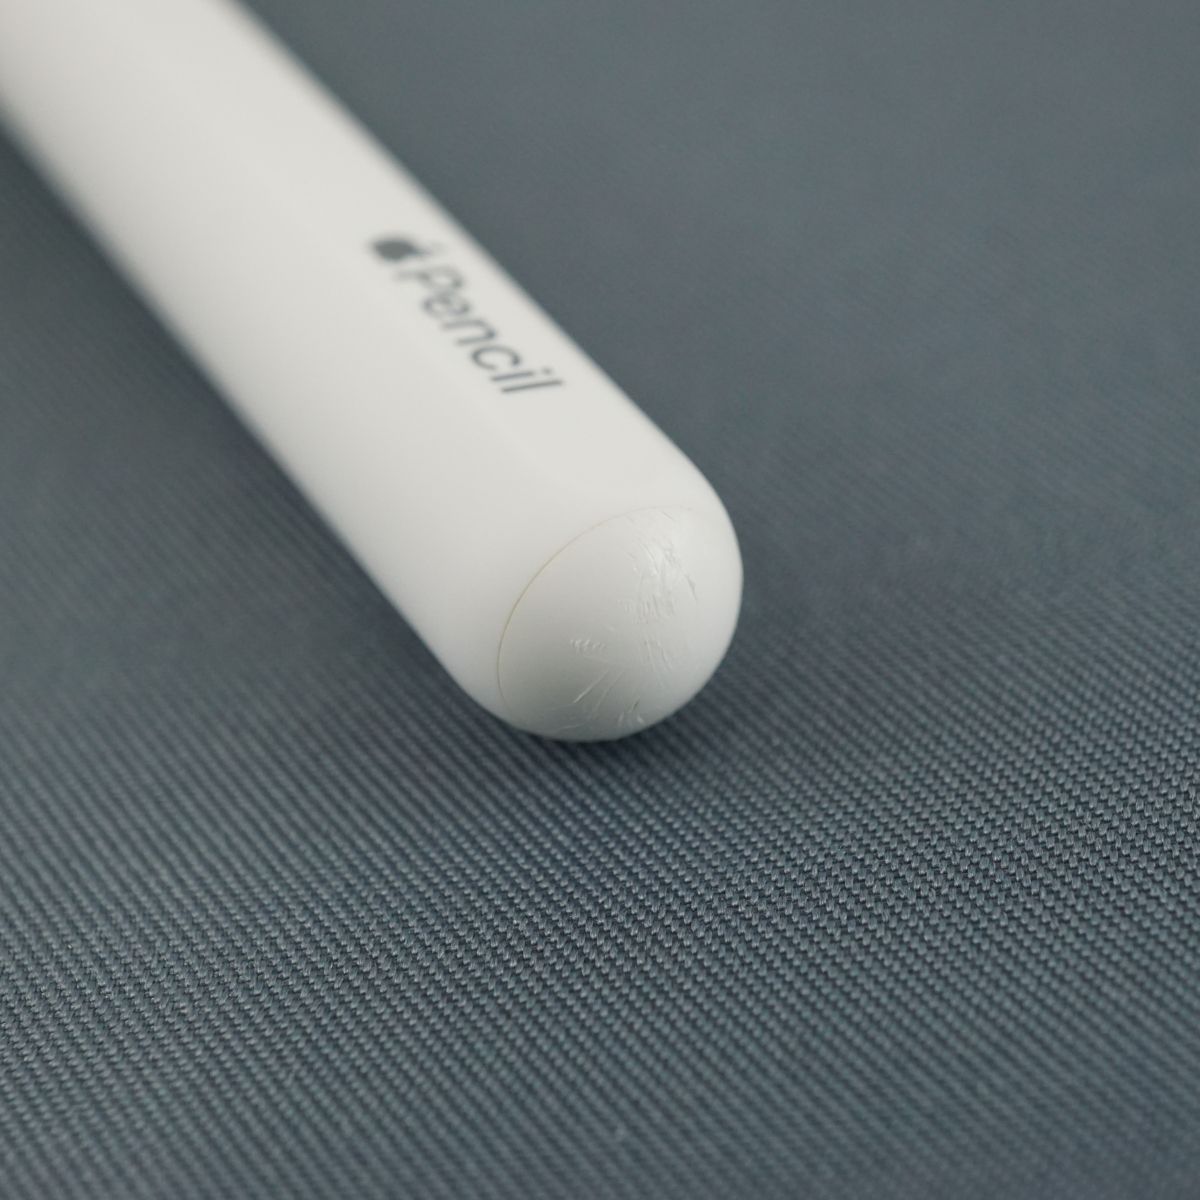 Apple Pencil USED品 本体のみ 第二世代 MU8F2JA タッチペン アップル